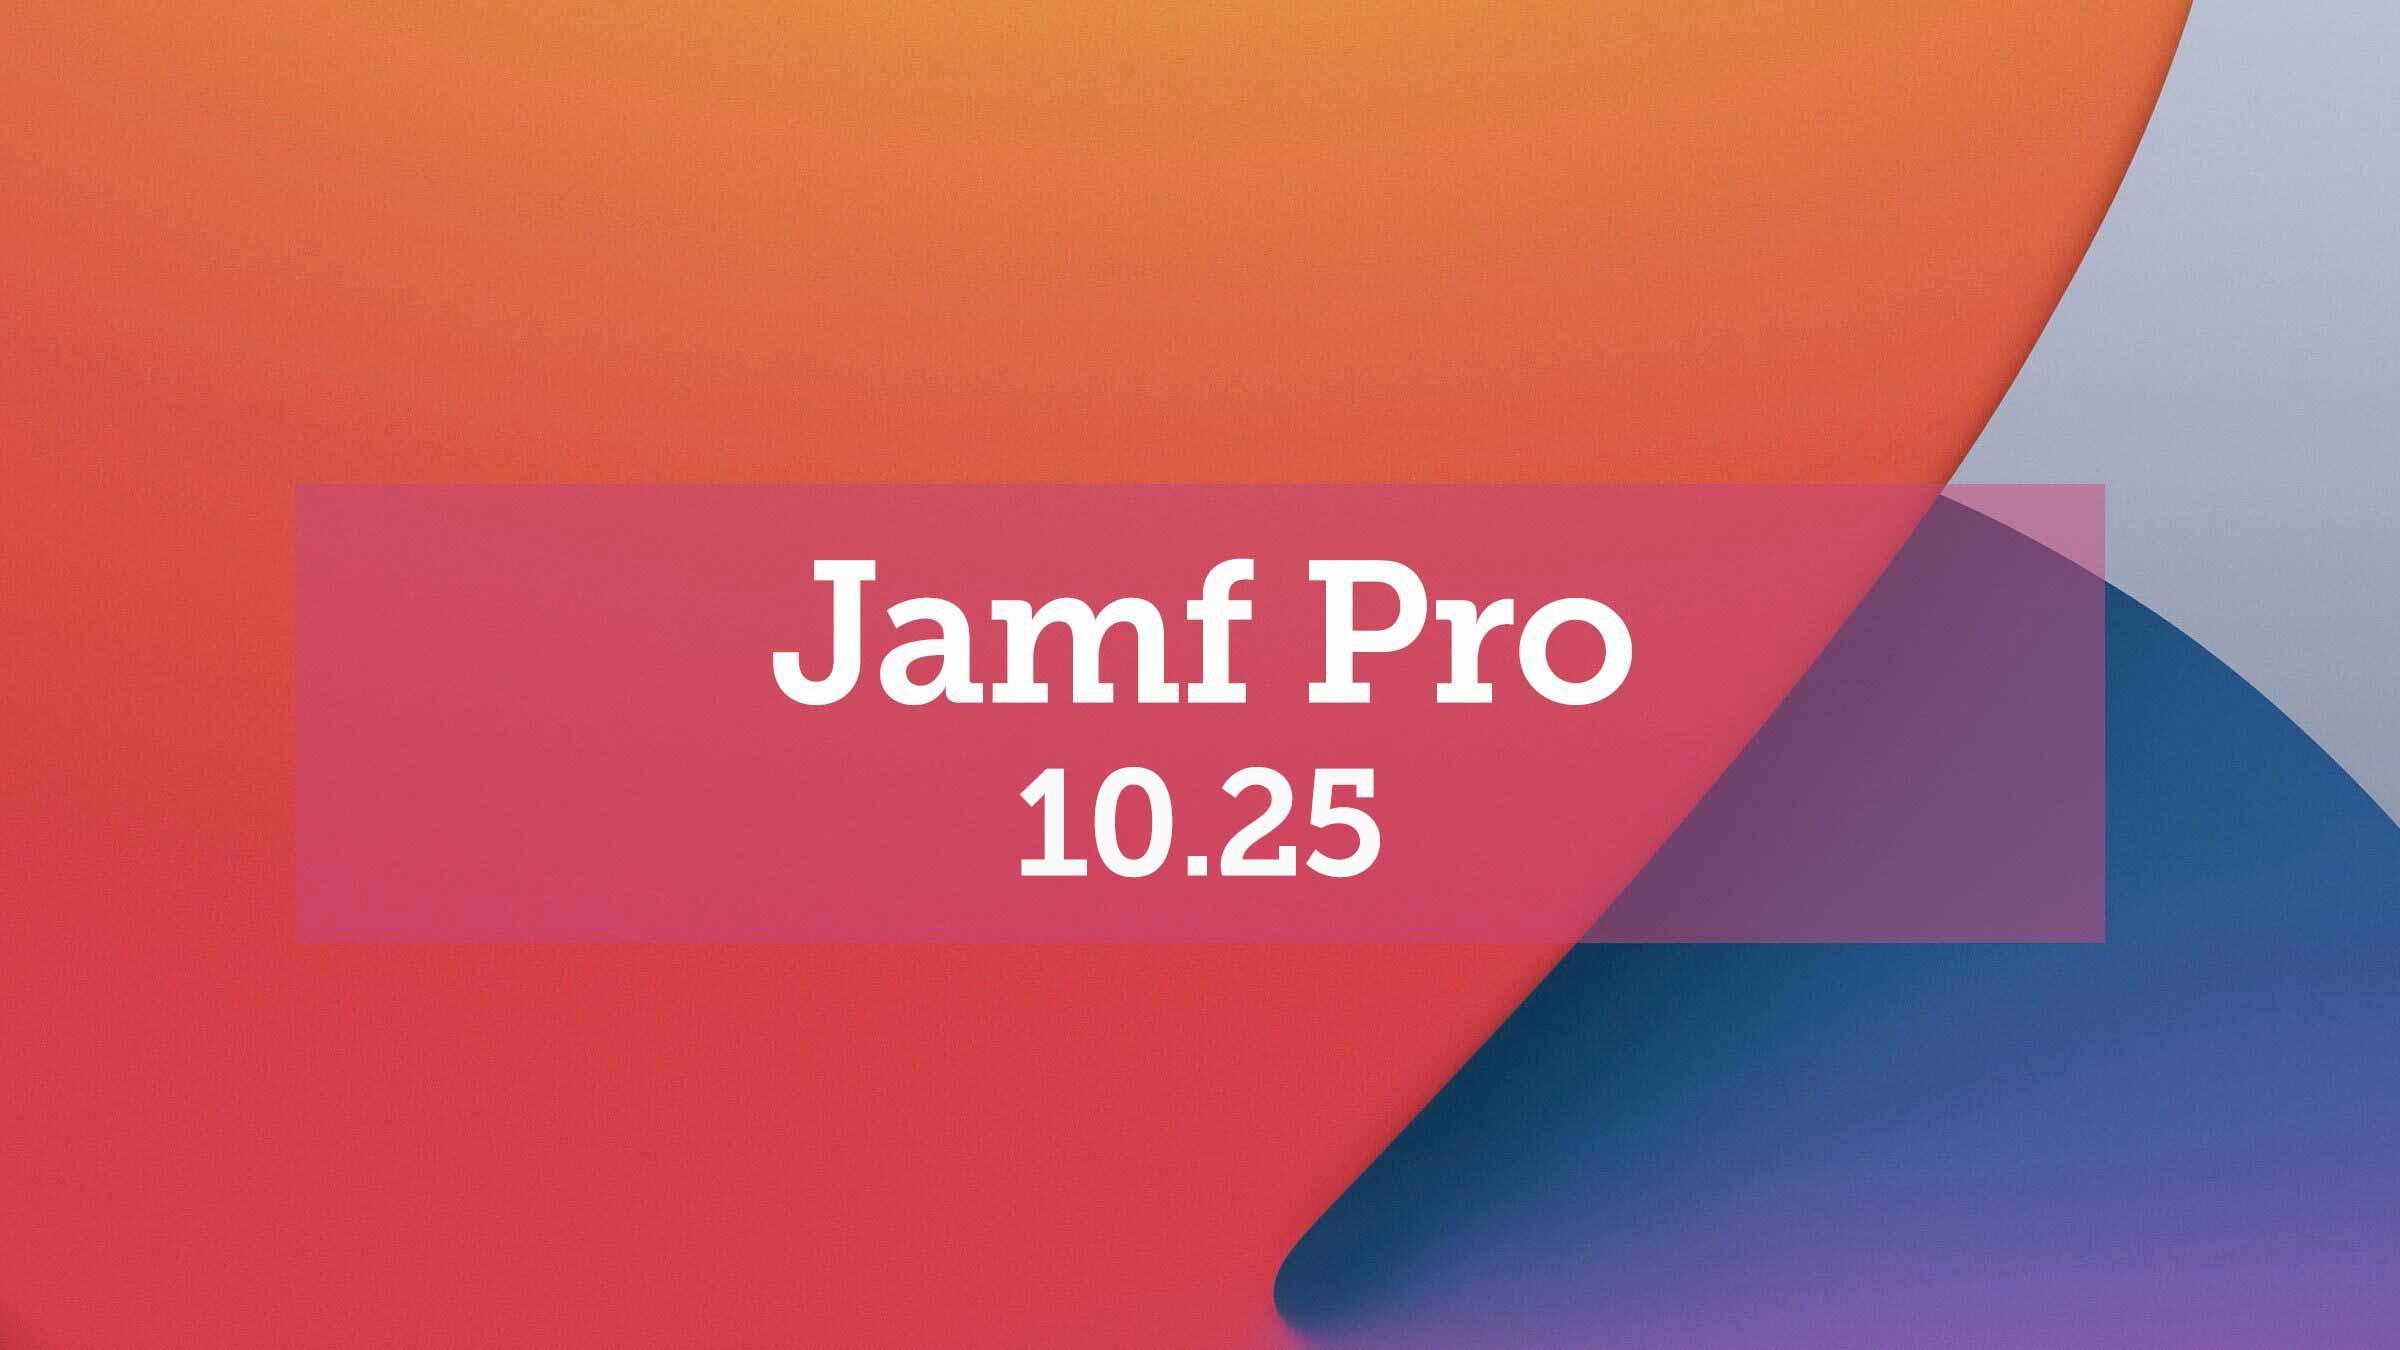 jamf pro server tools